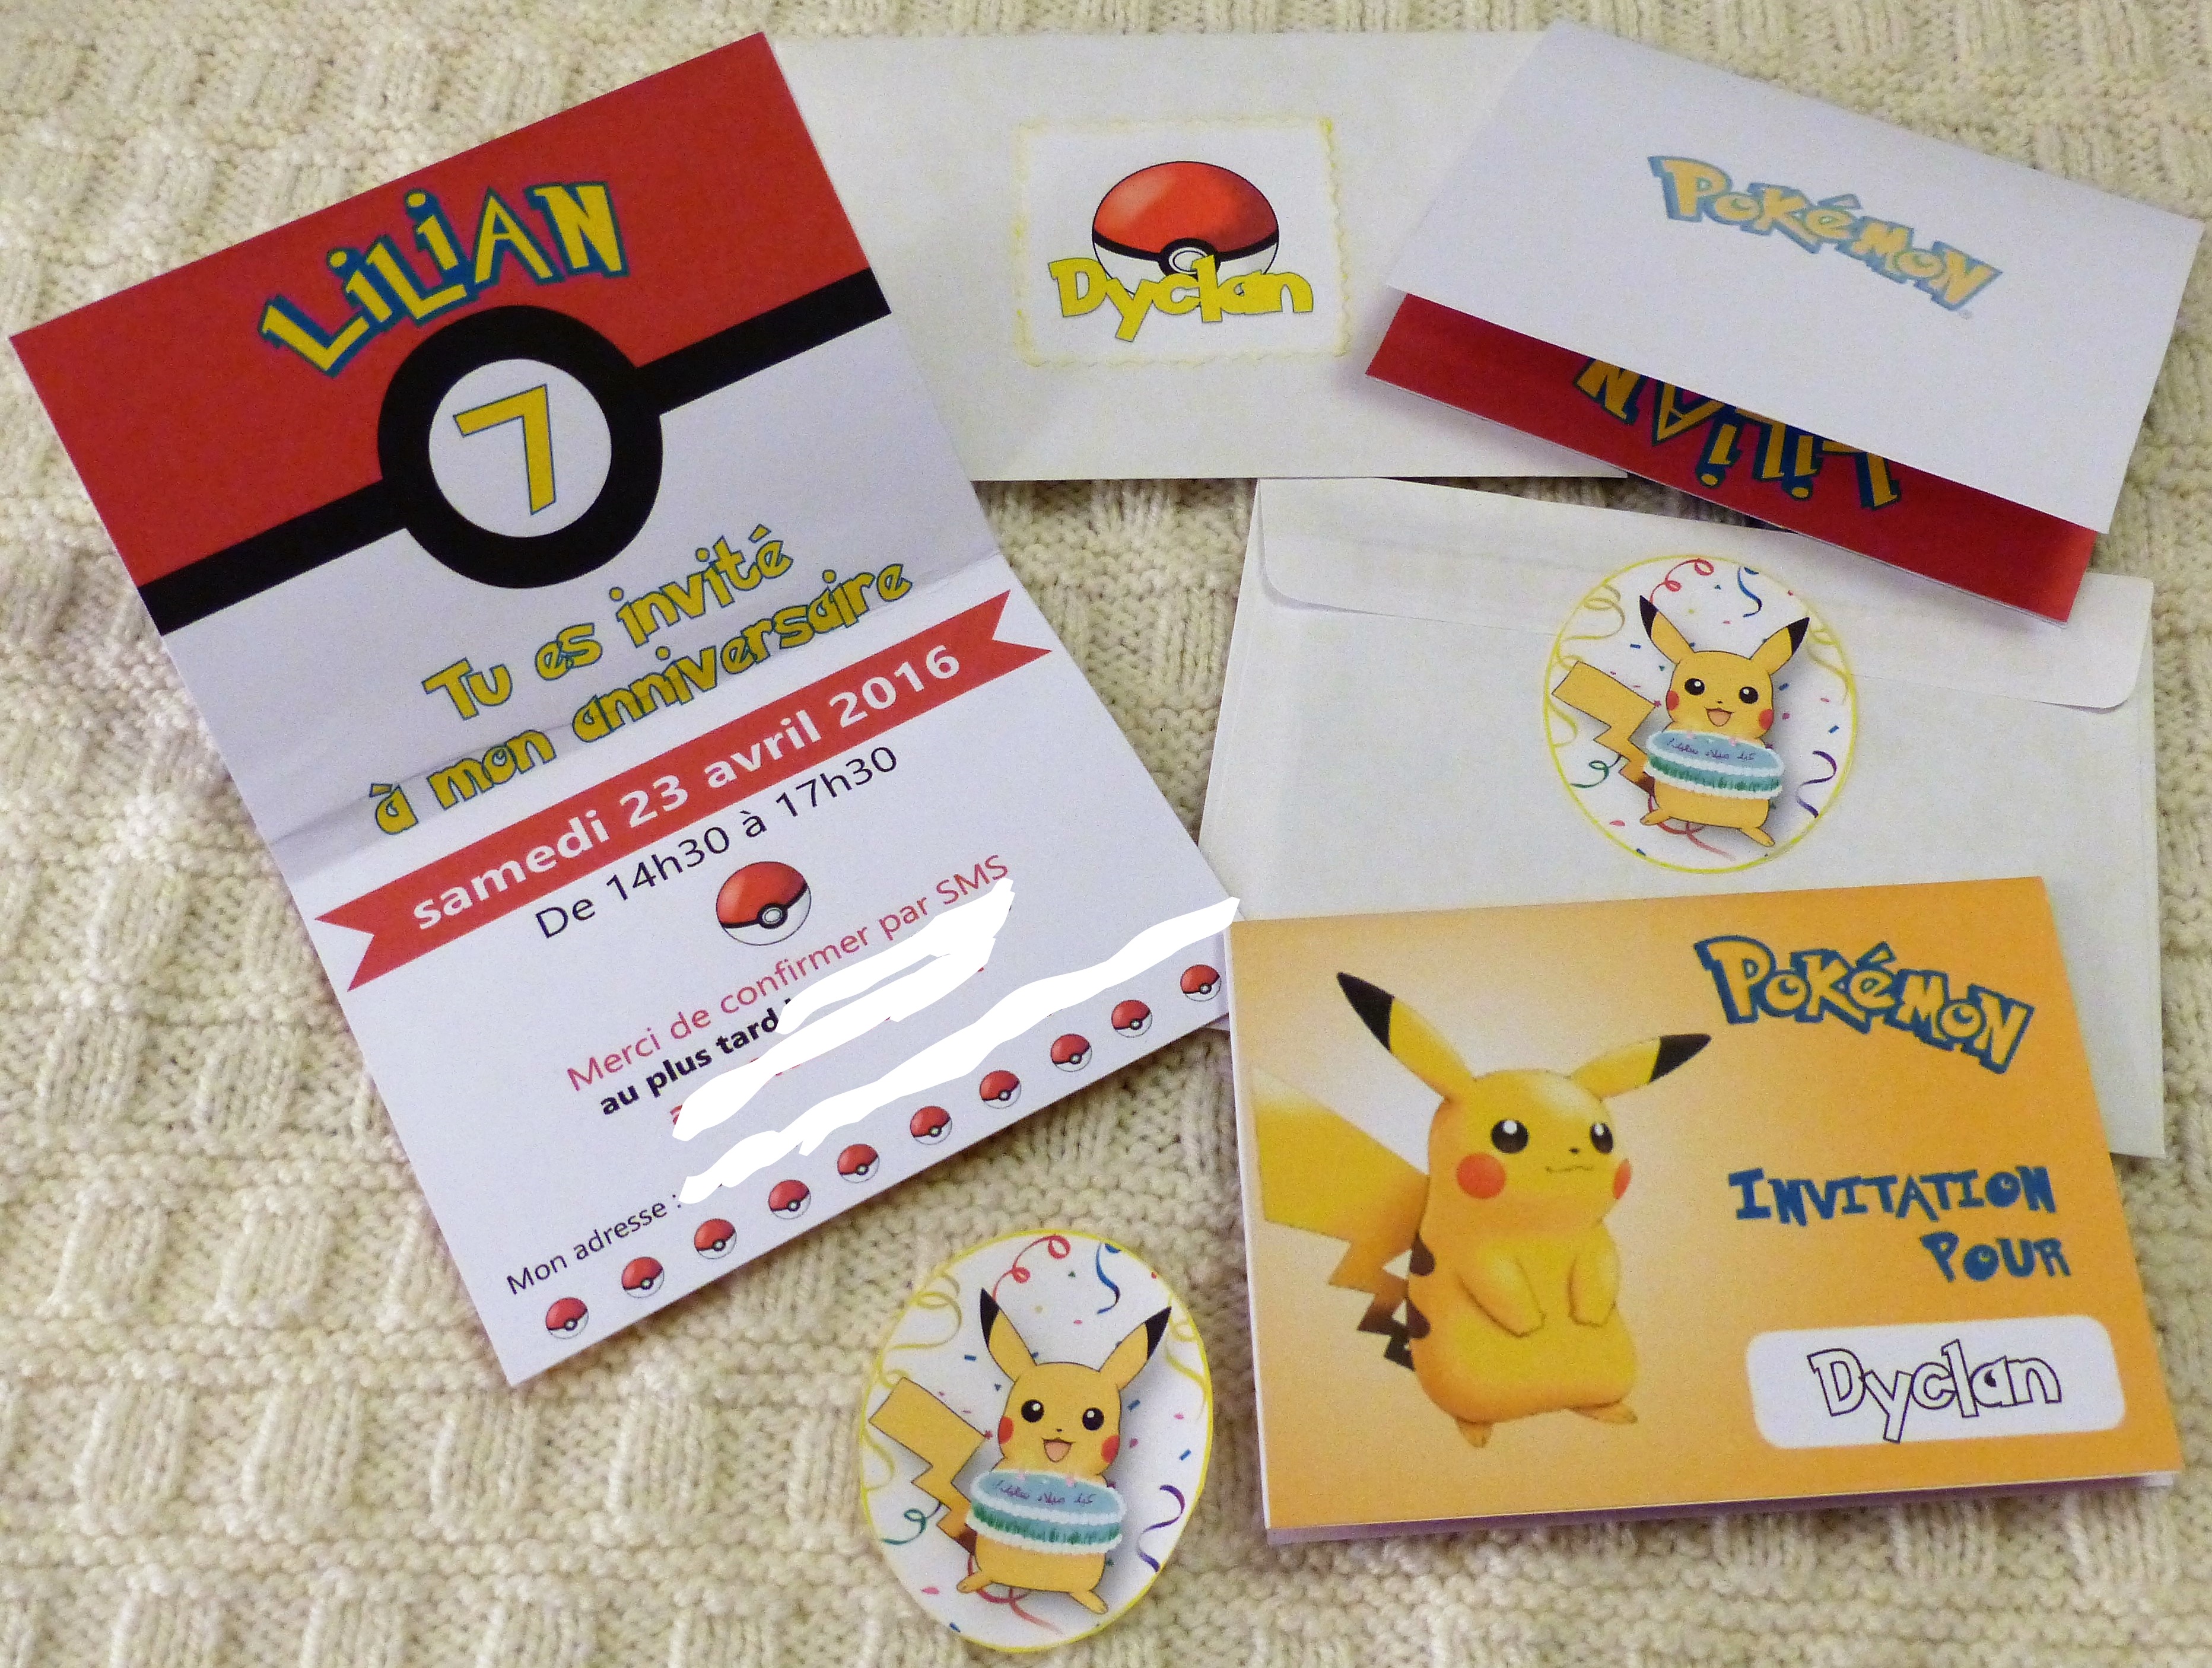 Top 10 invitations anniversaire pokemon - Les idées du samedi